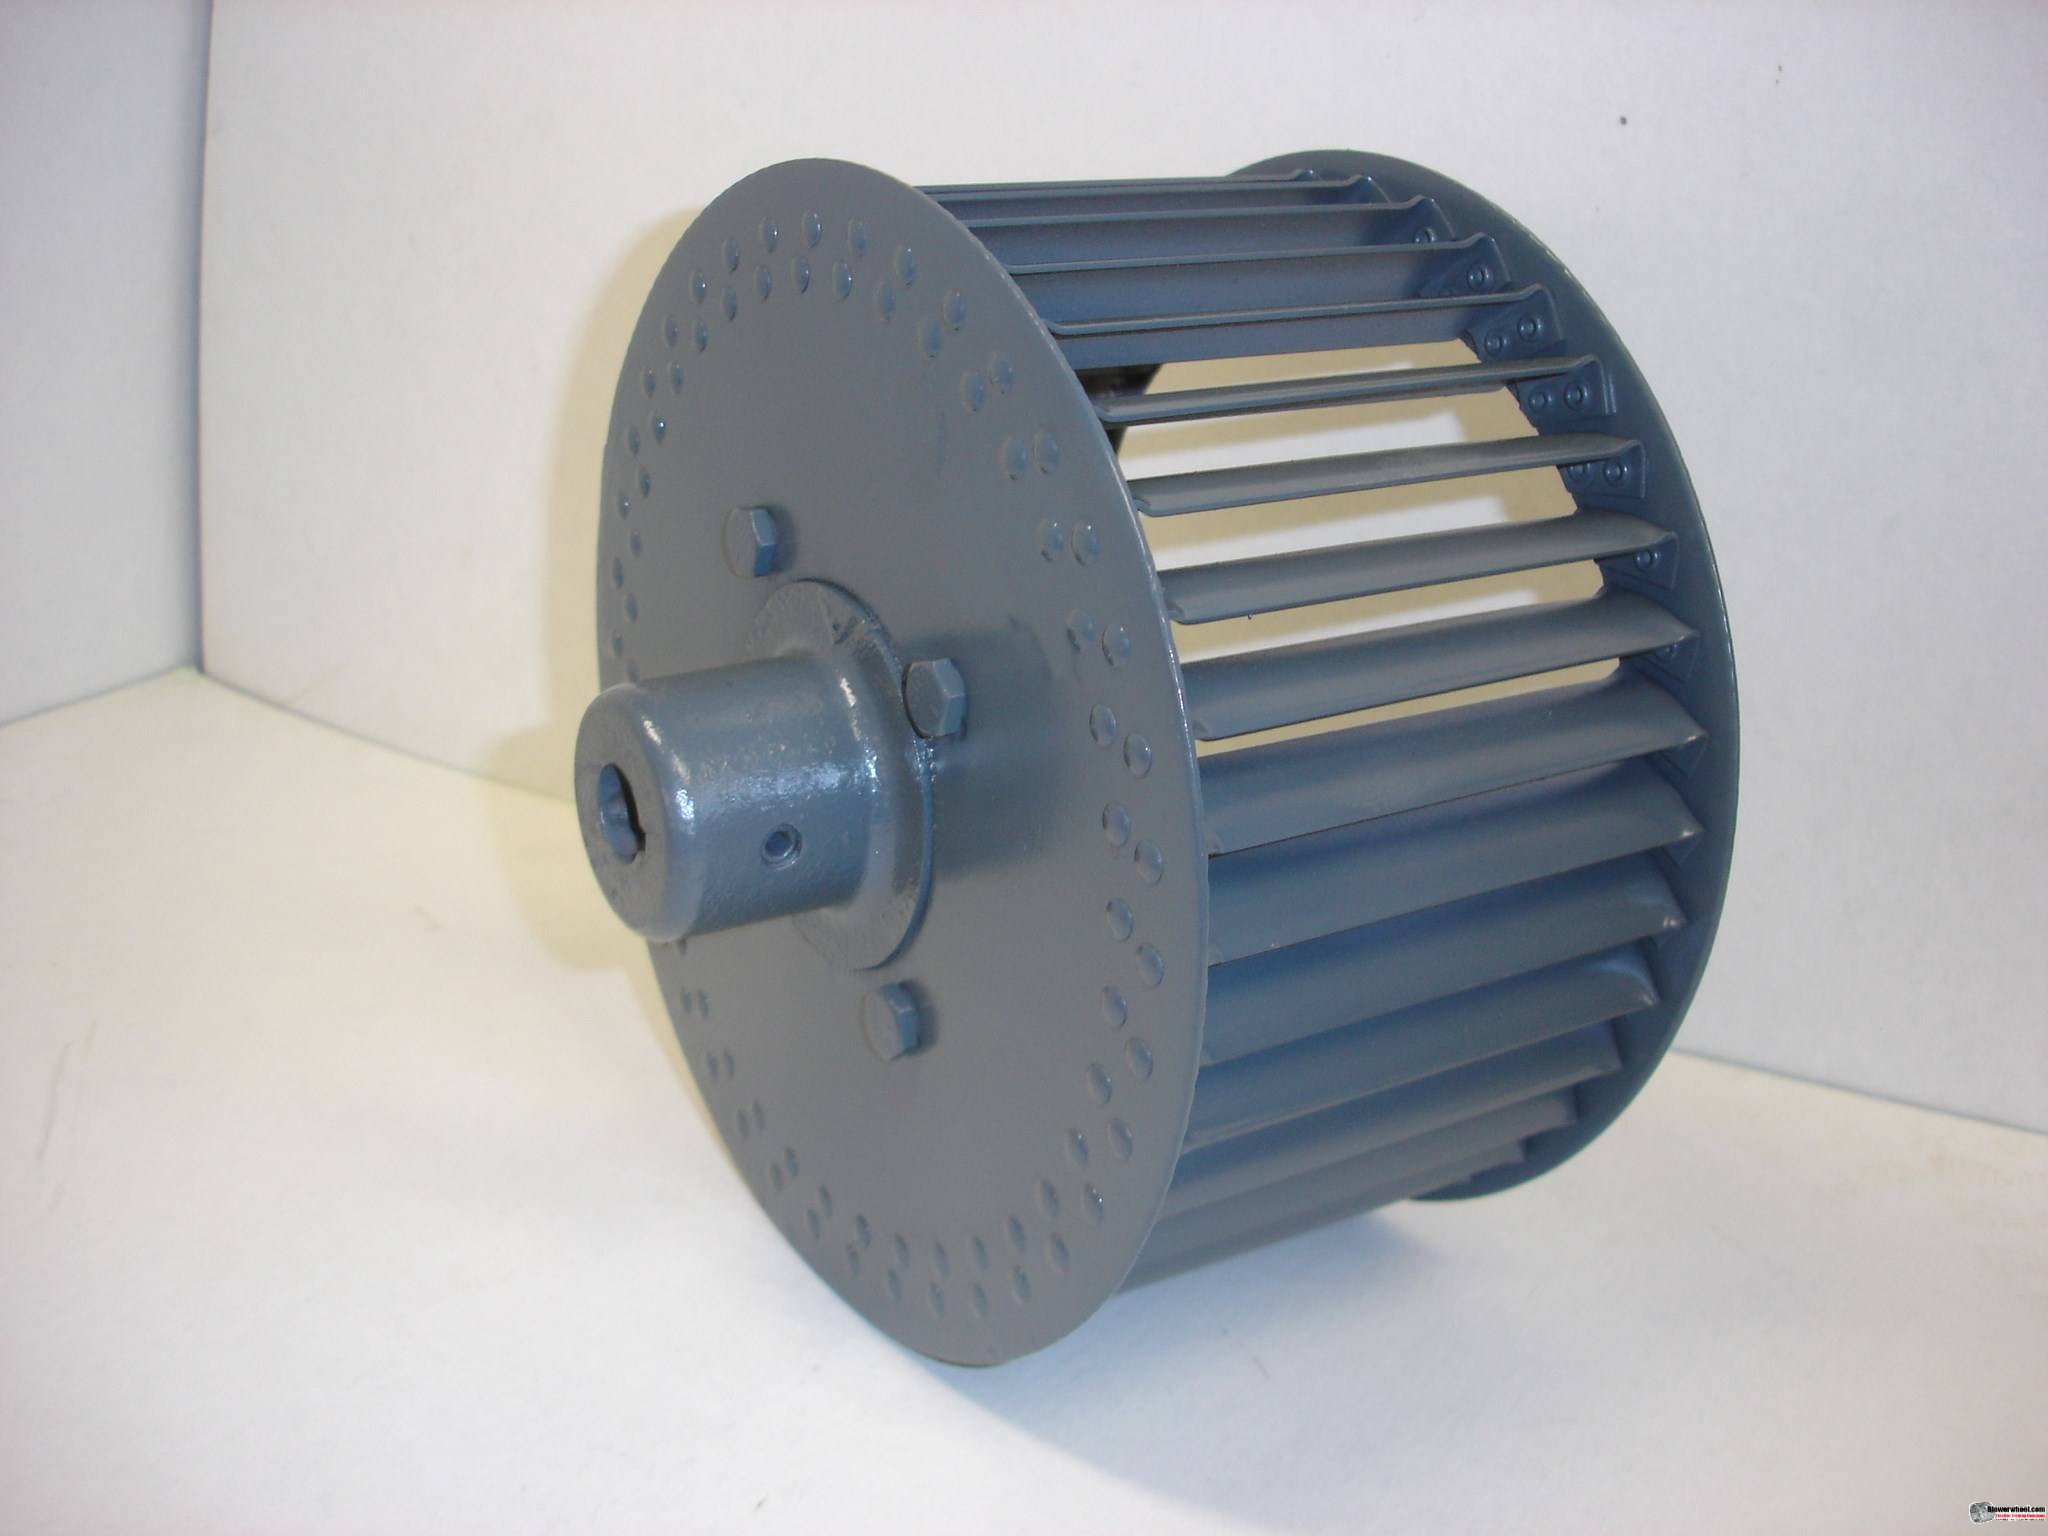 Single Inlet Steel Blower Wheel 10-13/16" Diameter 4-1/8" Width 5/8" Bore Clockwise rotation with an Outside Hub